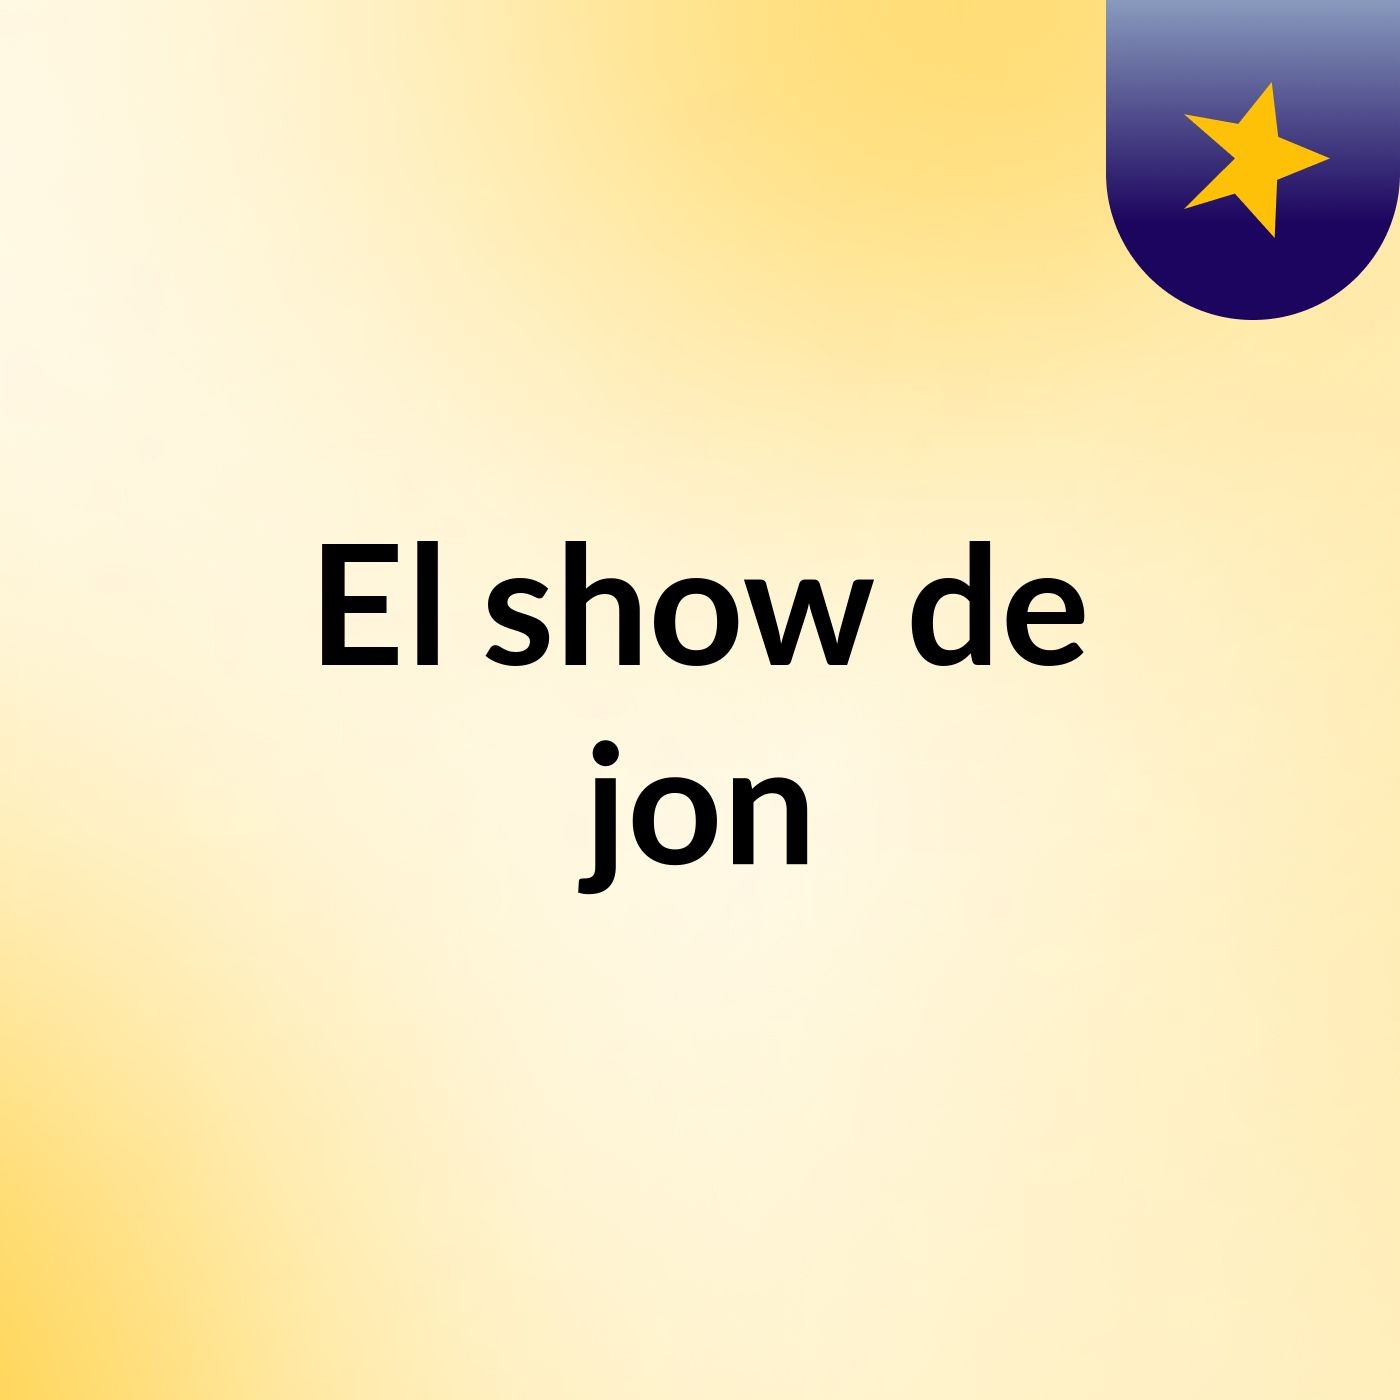 El show de jon